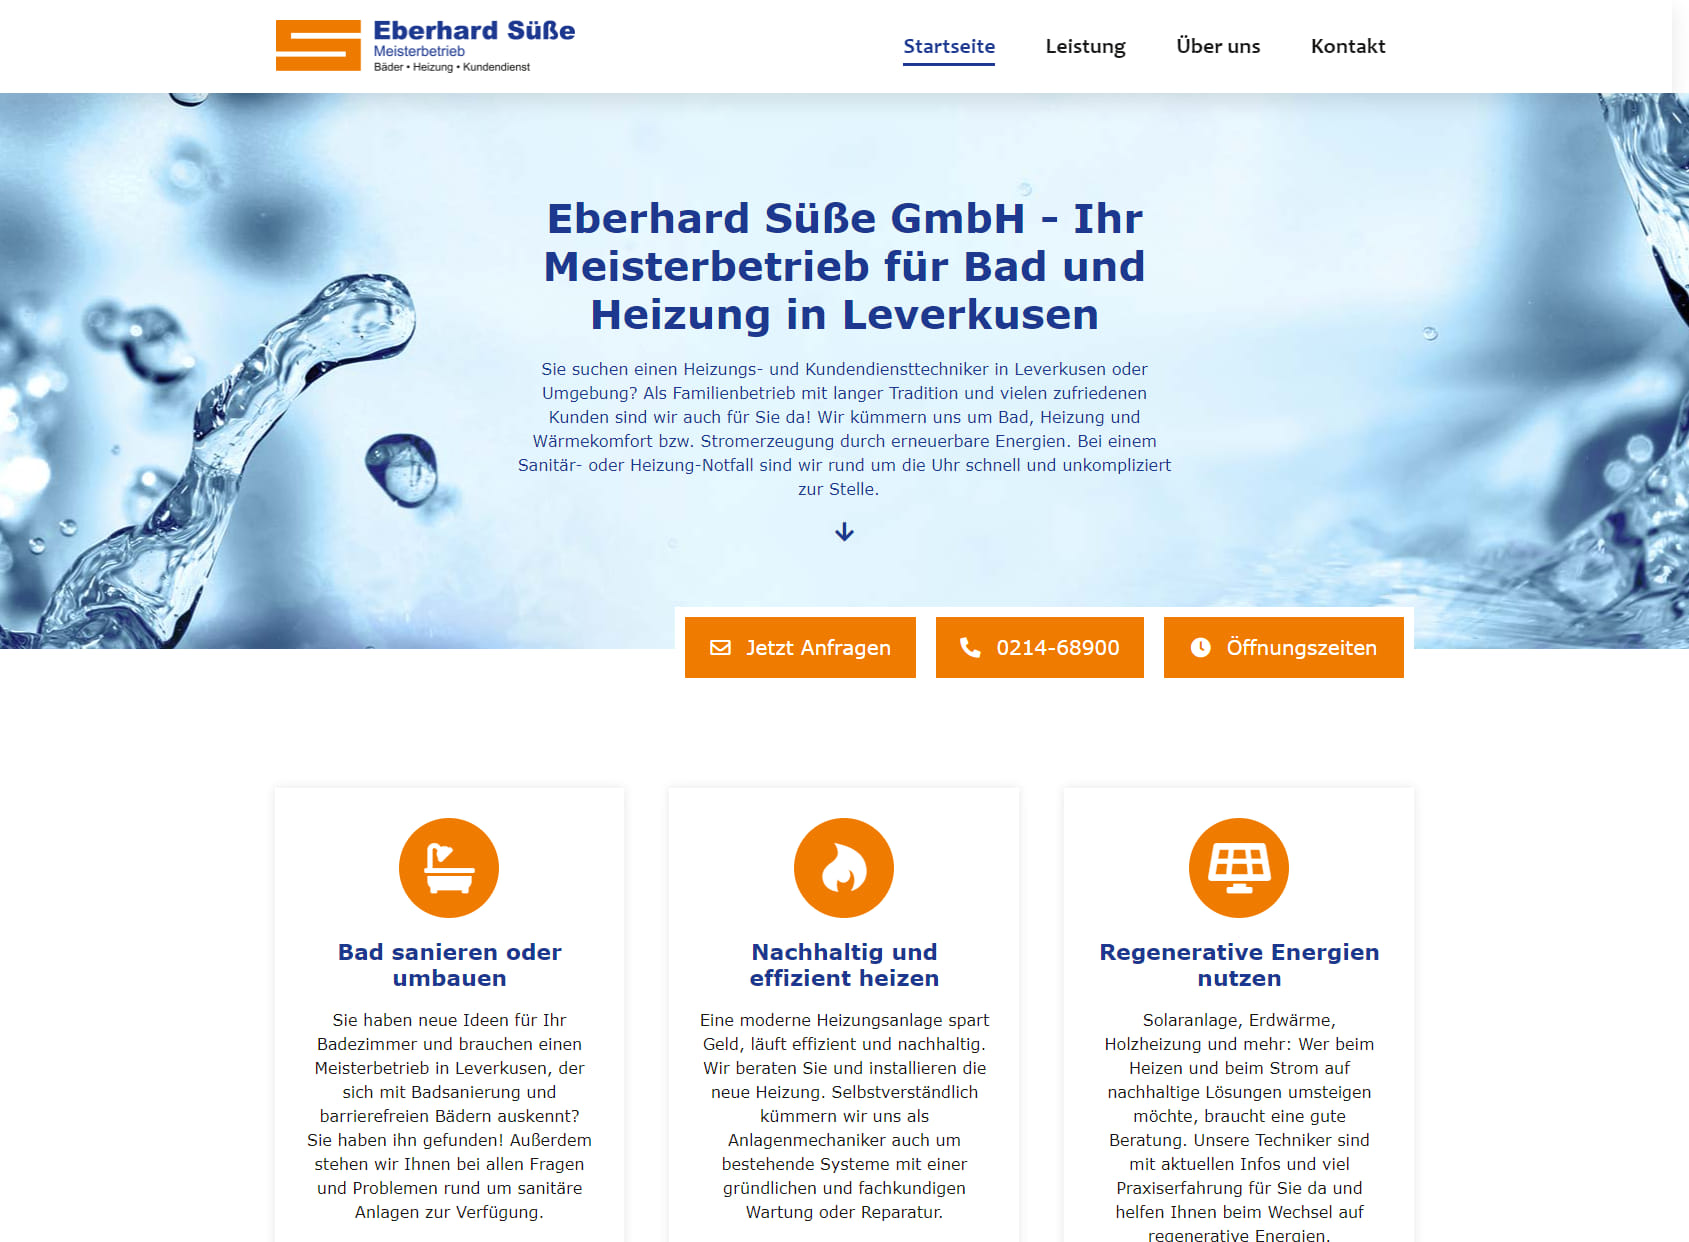 Eberhard Süße GmbH & Co. KG